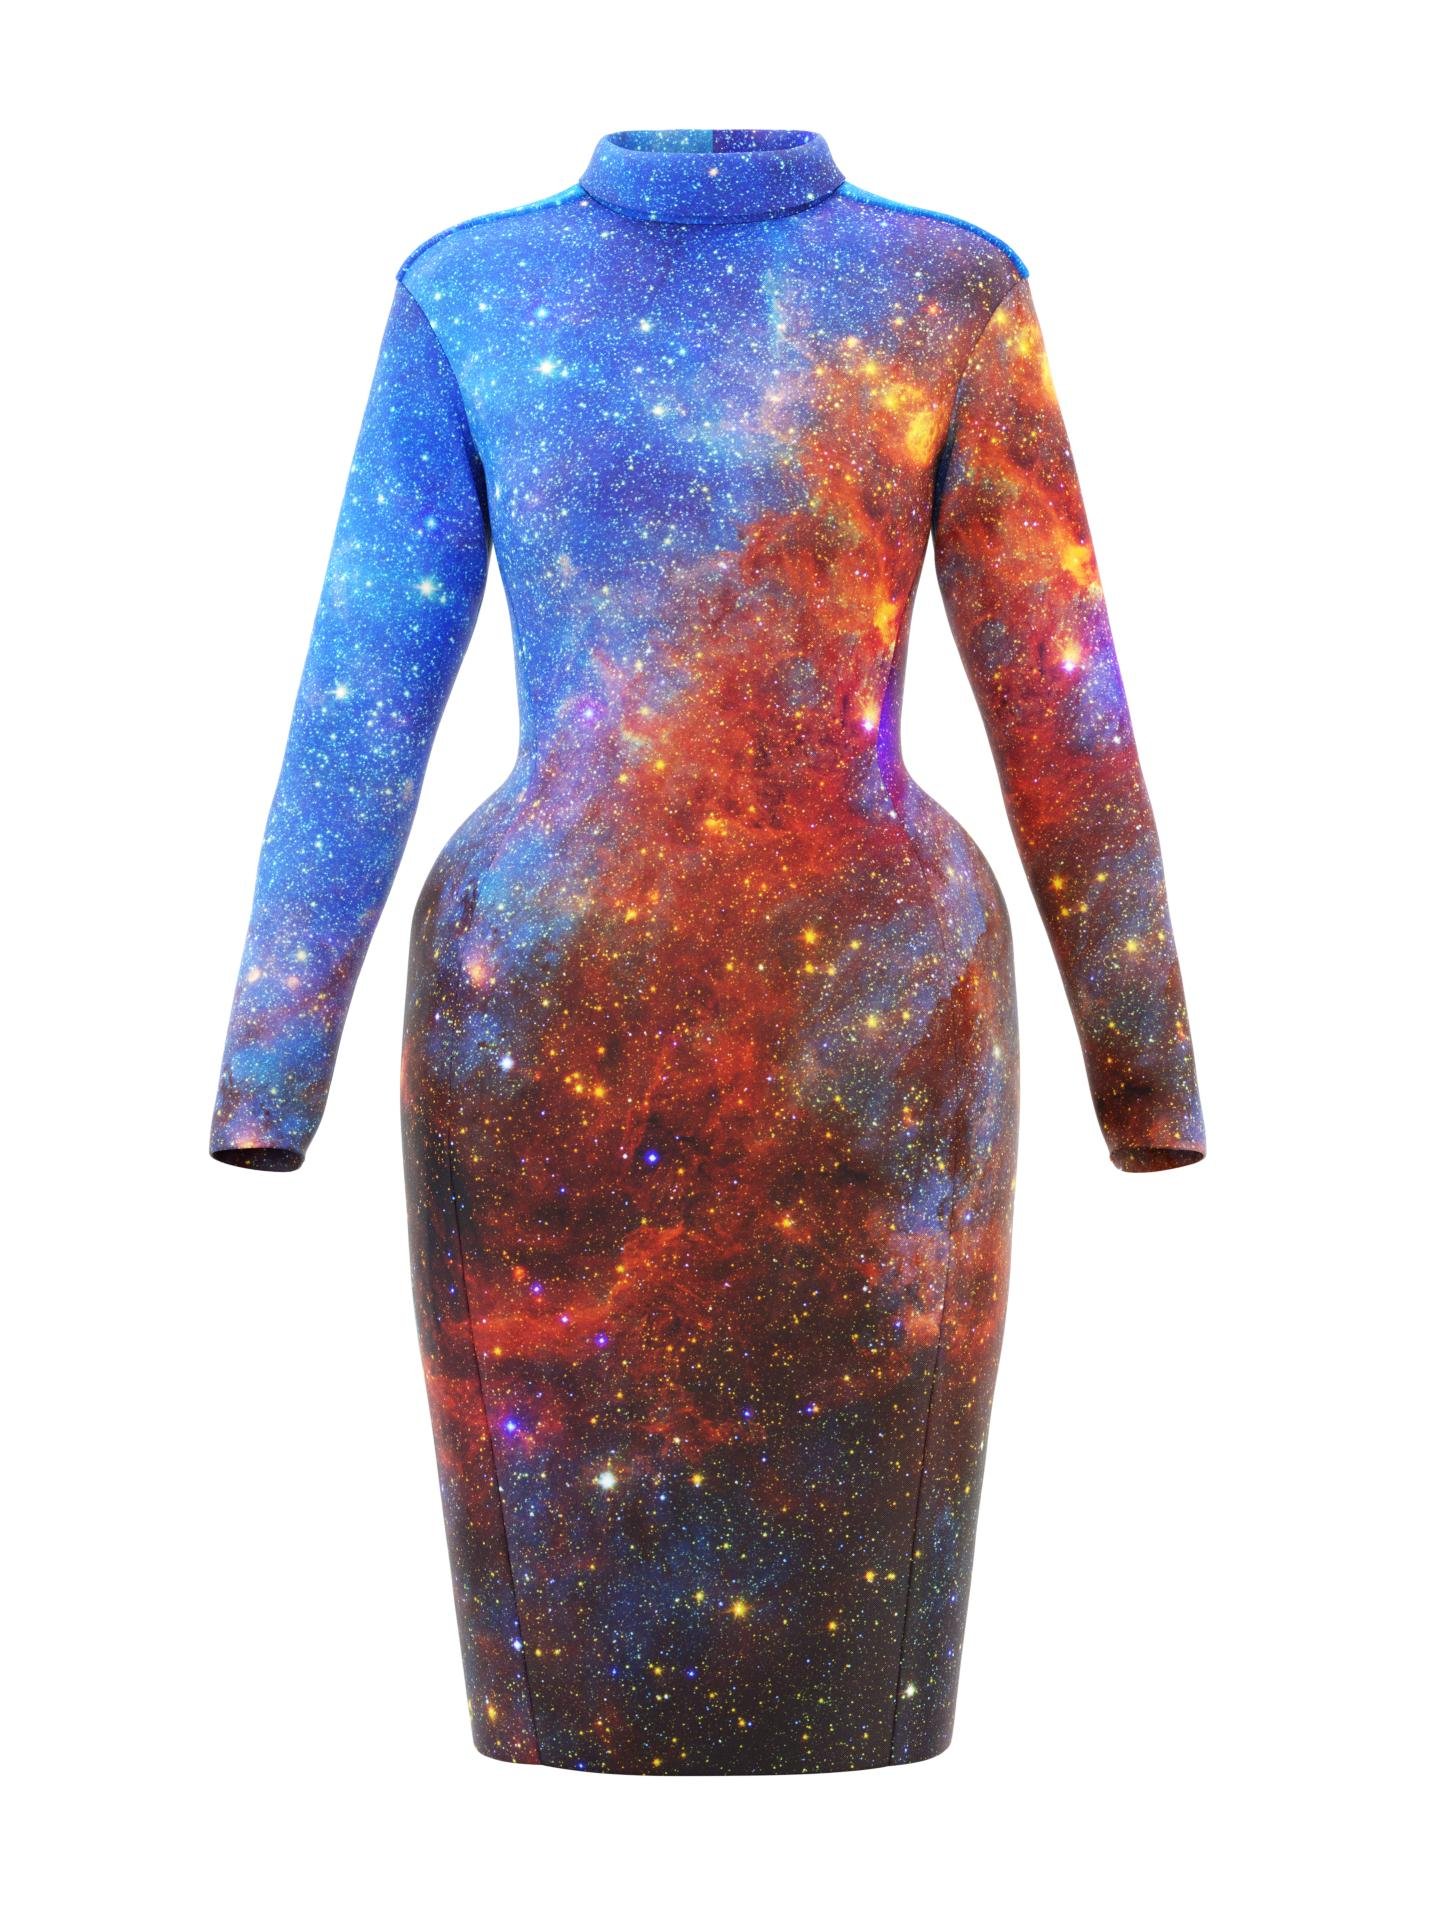 Space Dress - Telescope by DRESSX